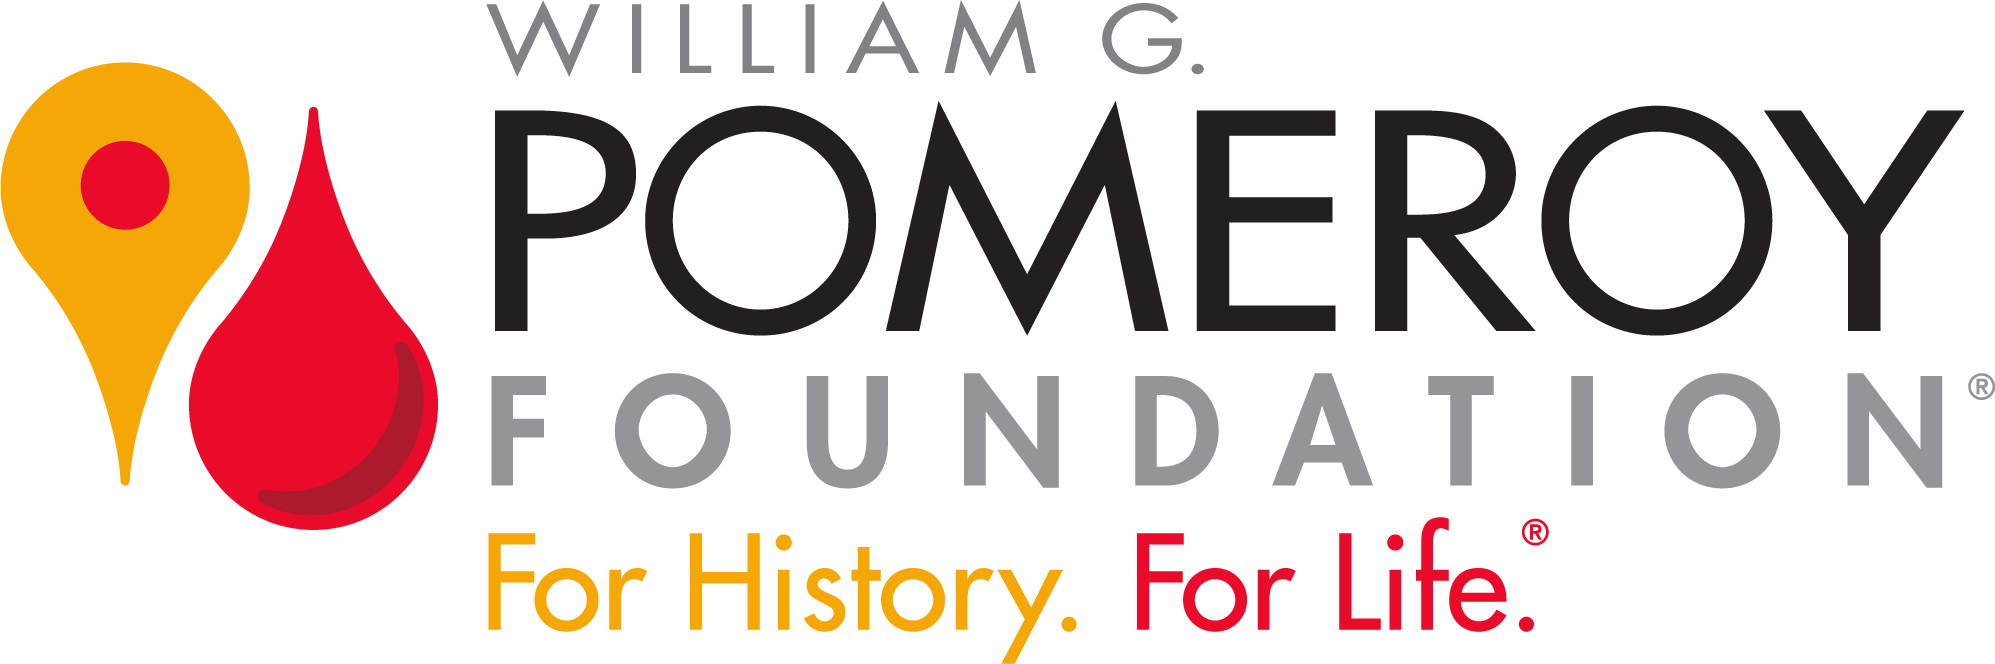 William G. Pomeroy Foundation Logo